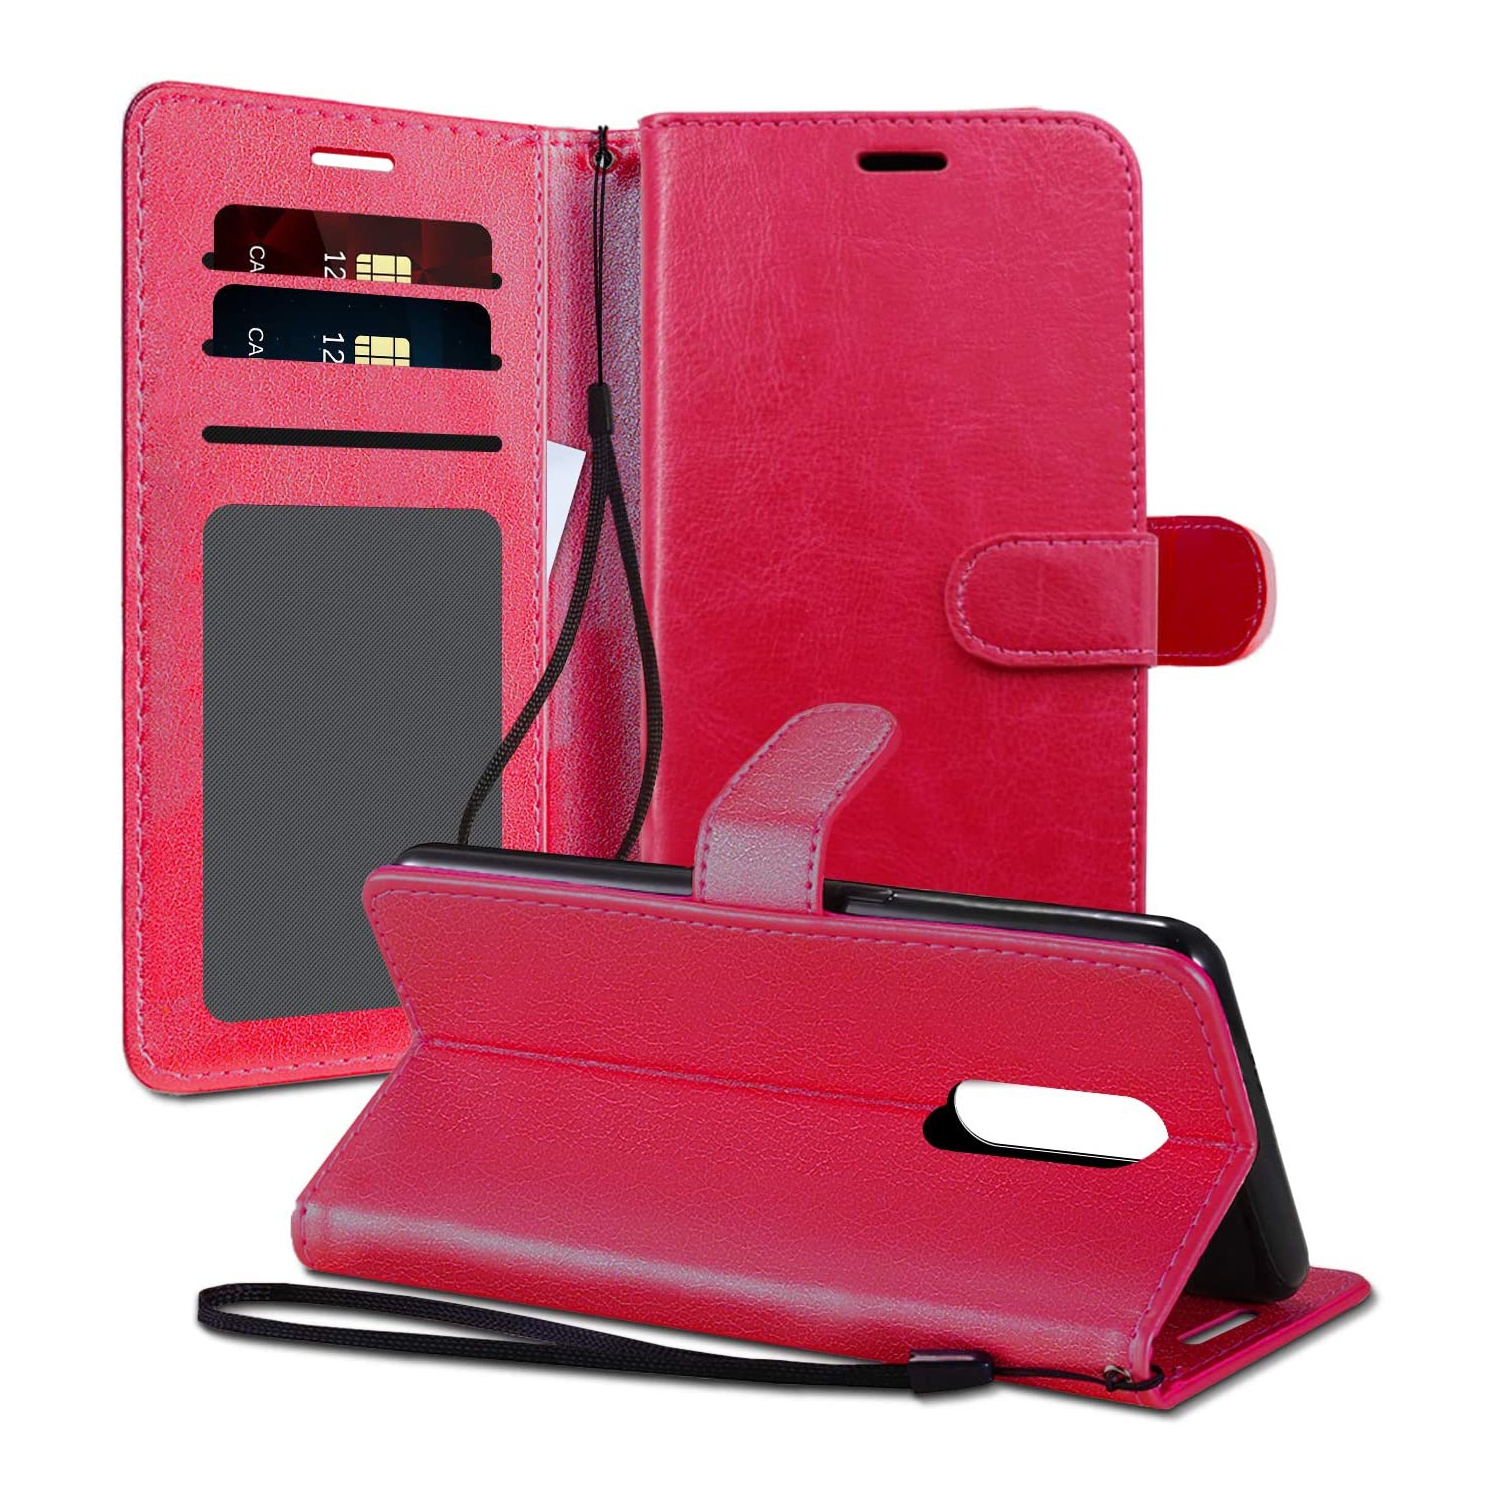 【CSmart】 Magnetic Card Slot Leather Folio Wallet Flip Case Cover for LG K30 2019, Red